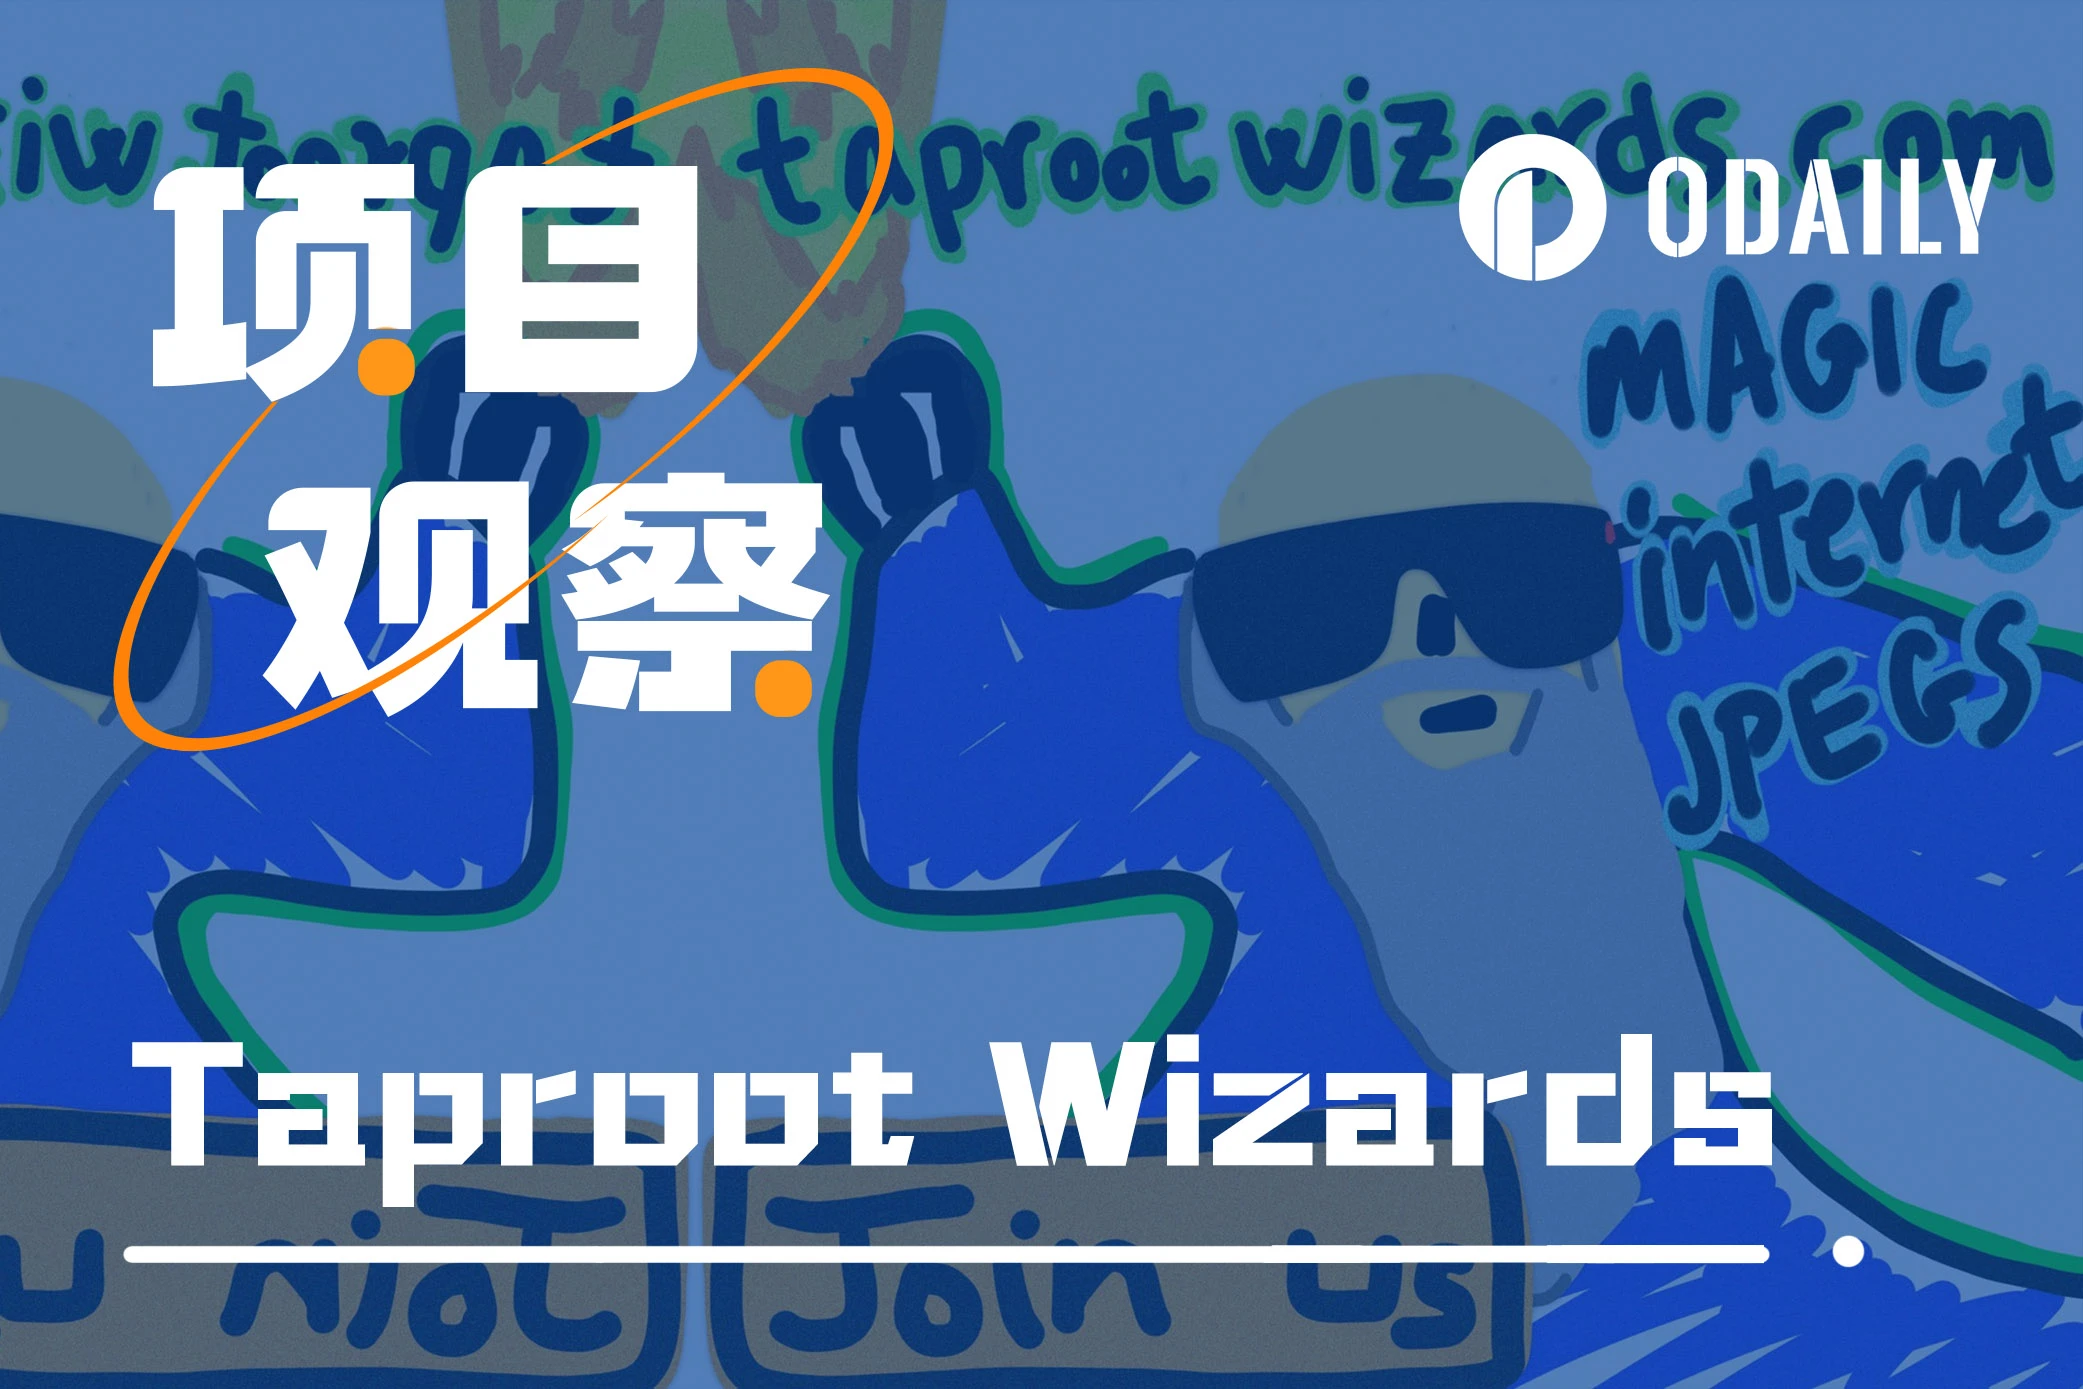 BTC Ecology｜Raising US.5 million to rebuild “Wizard Village”, detailing Taproot Wizards construction plan